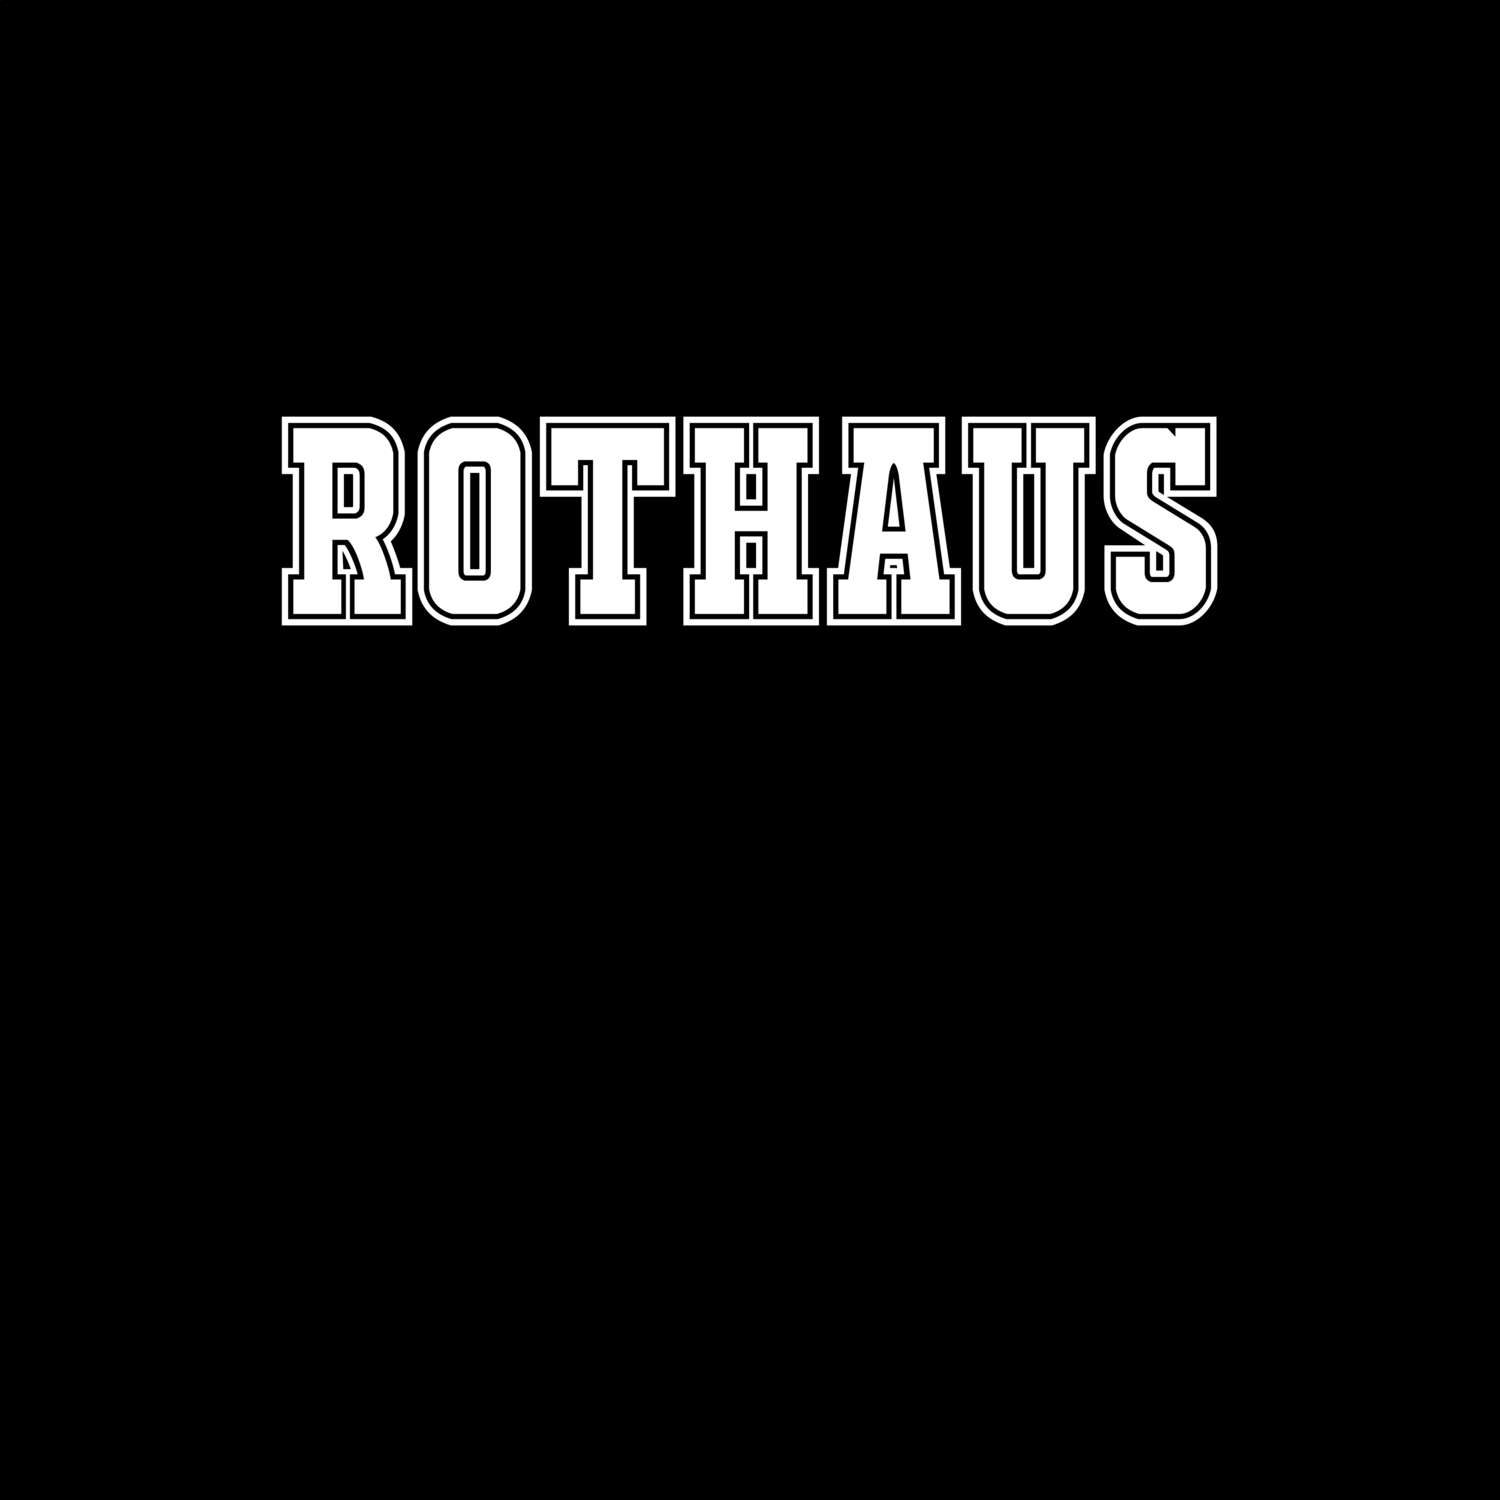 Rothaus T-Shirt »Classic«